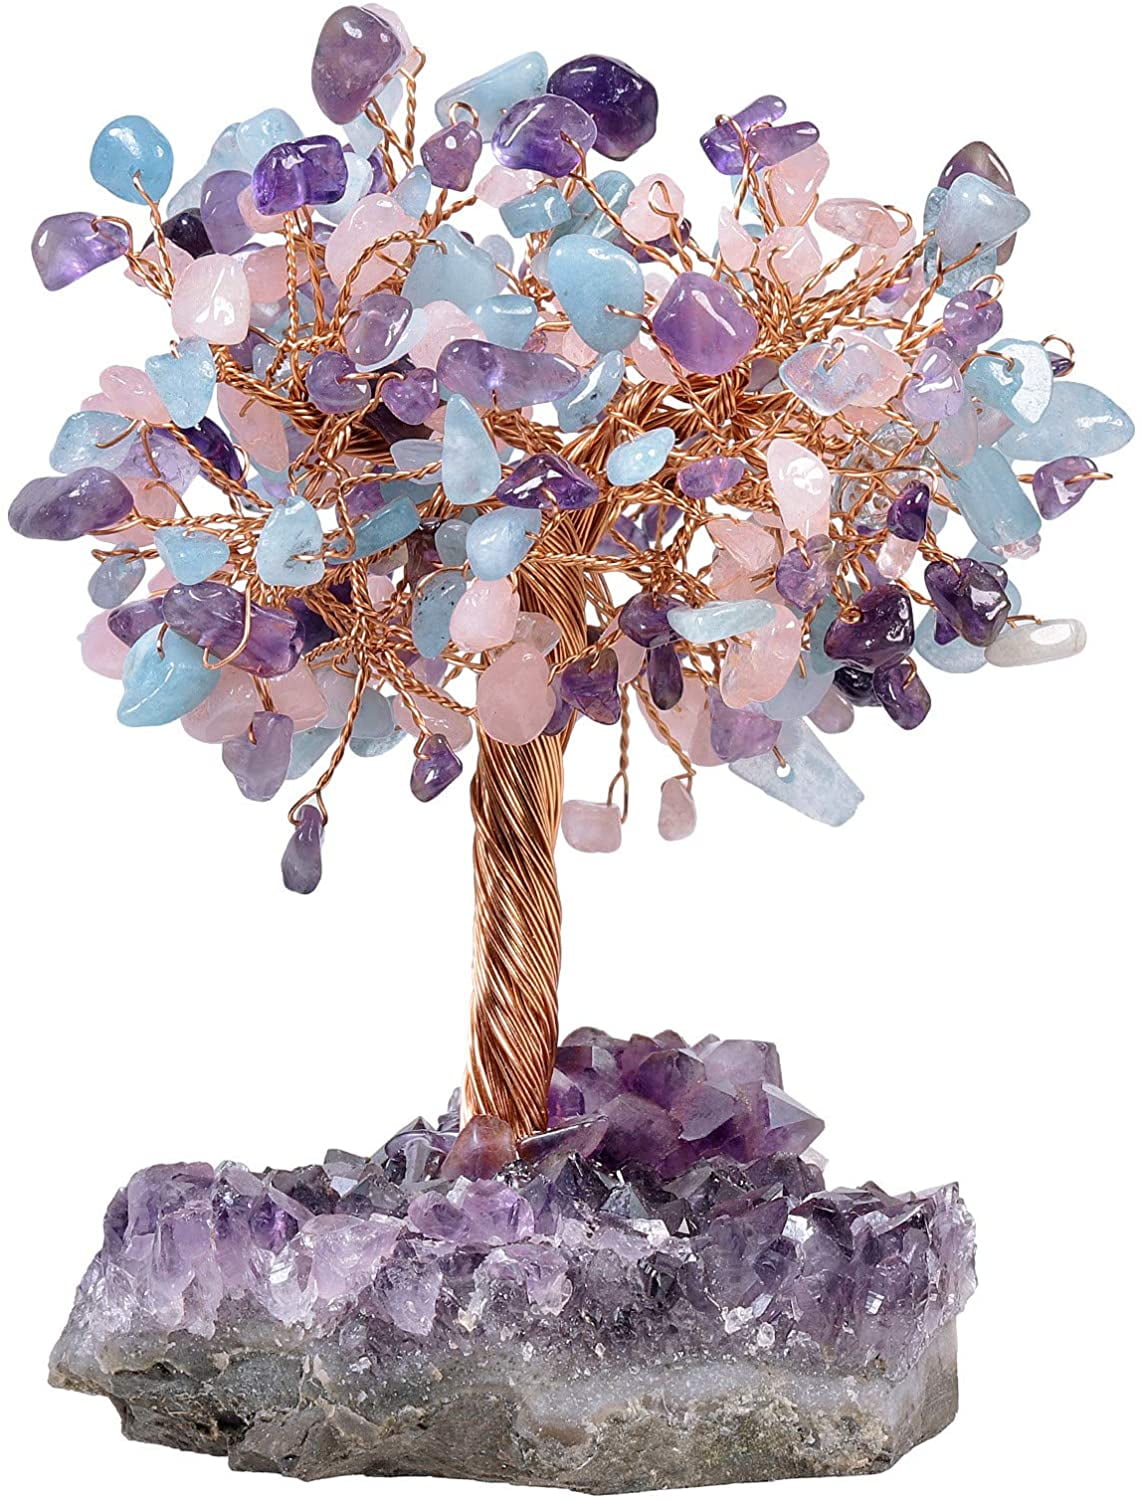 Decorative Stones for Crafts Stone Decorative Natural Pines Nut Pines Cones Pendant Acorns Crafts Small Ornament Jeweled Rose Quartz Amethyst Flower